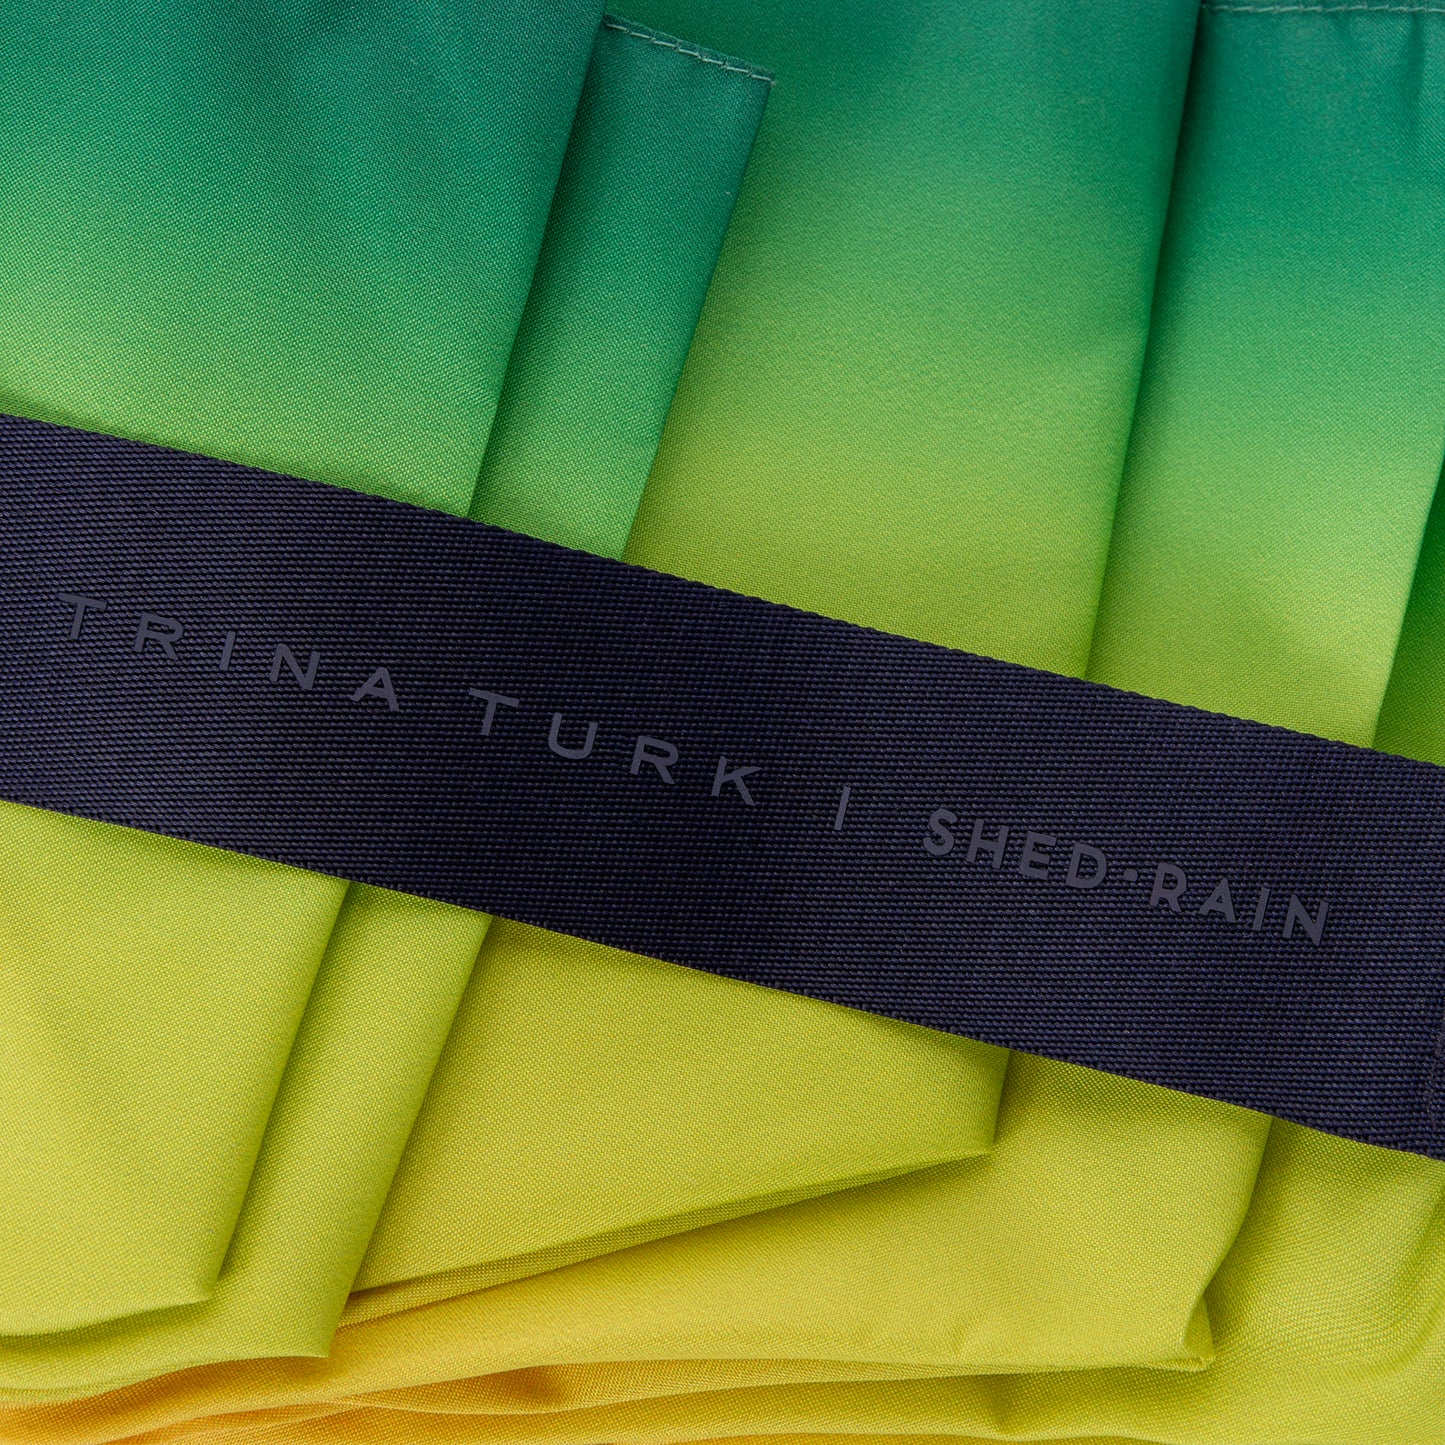 TRINA TURK x SHED RAIN Ombre Compact Umbrella